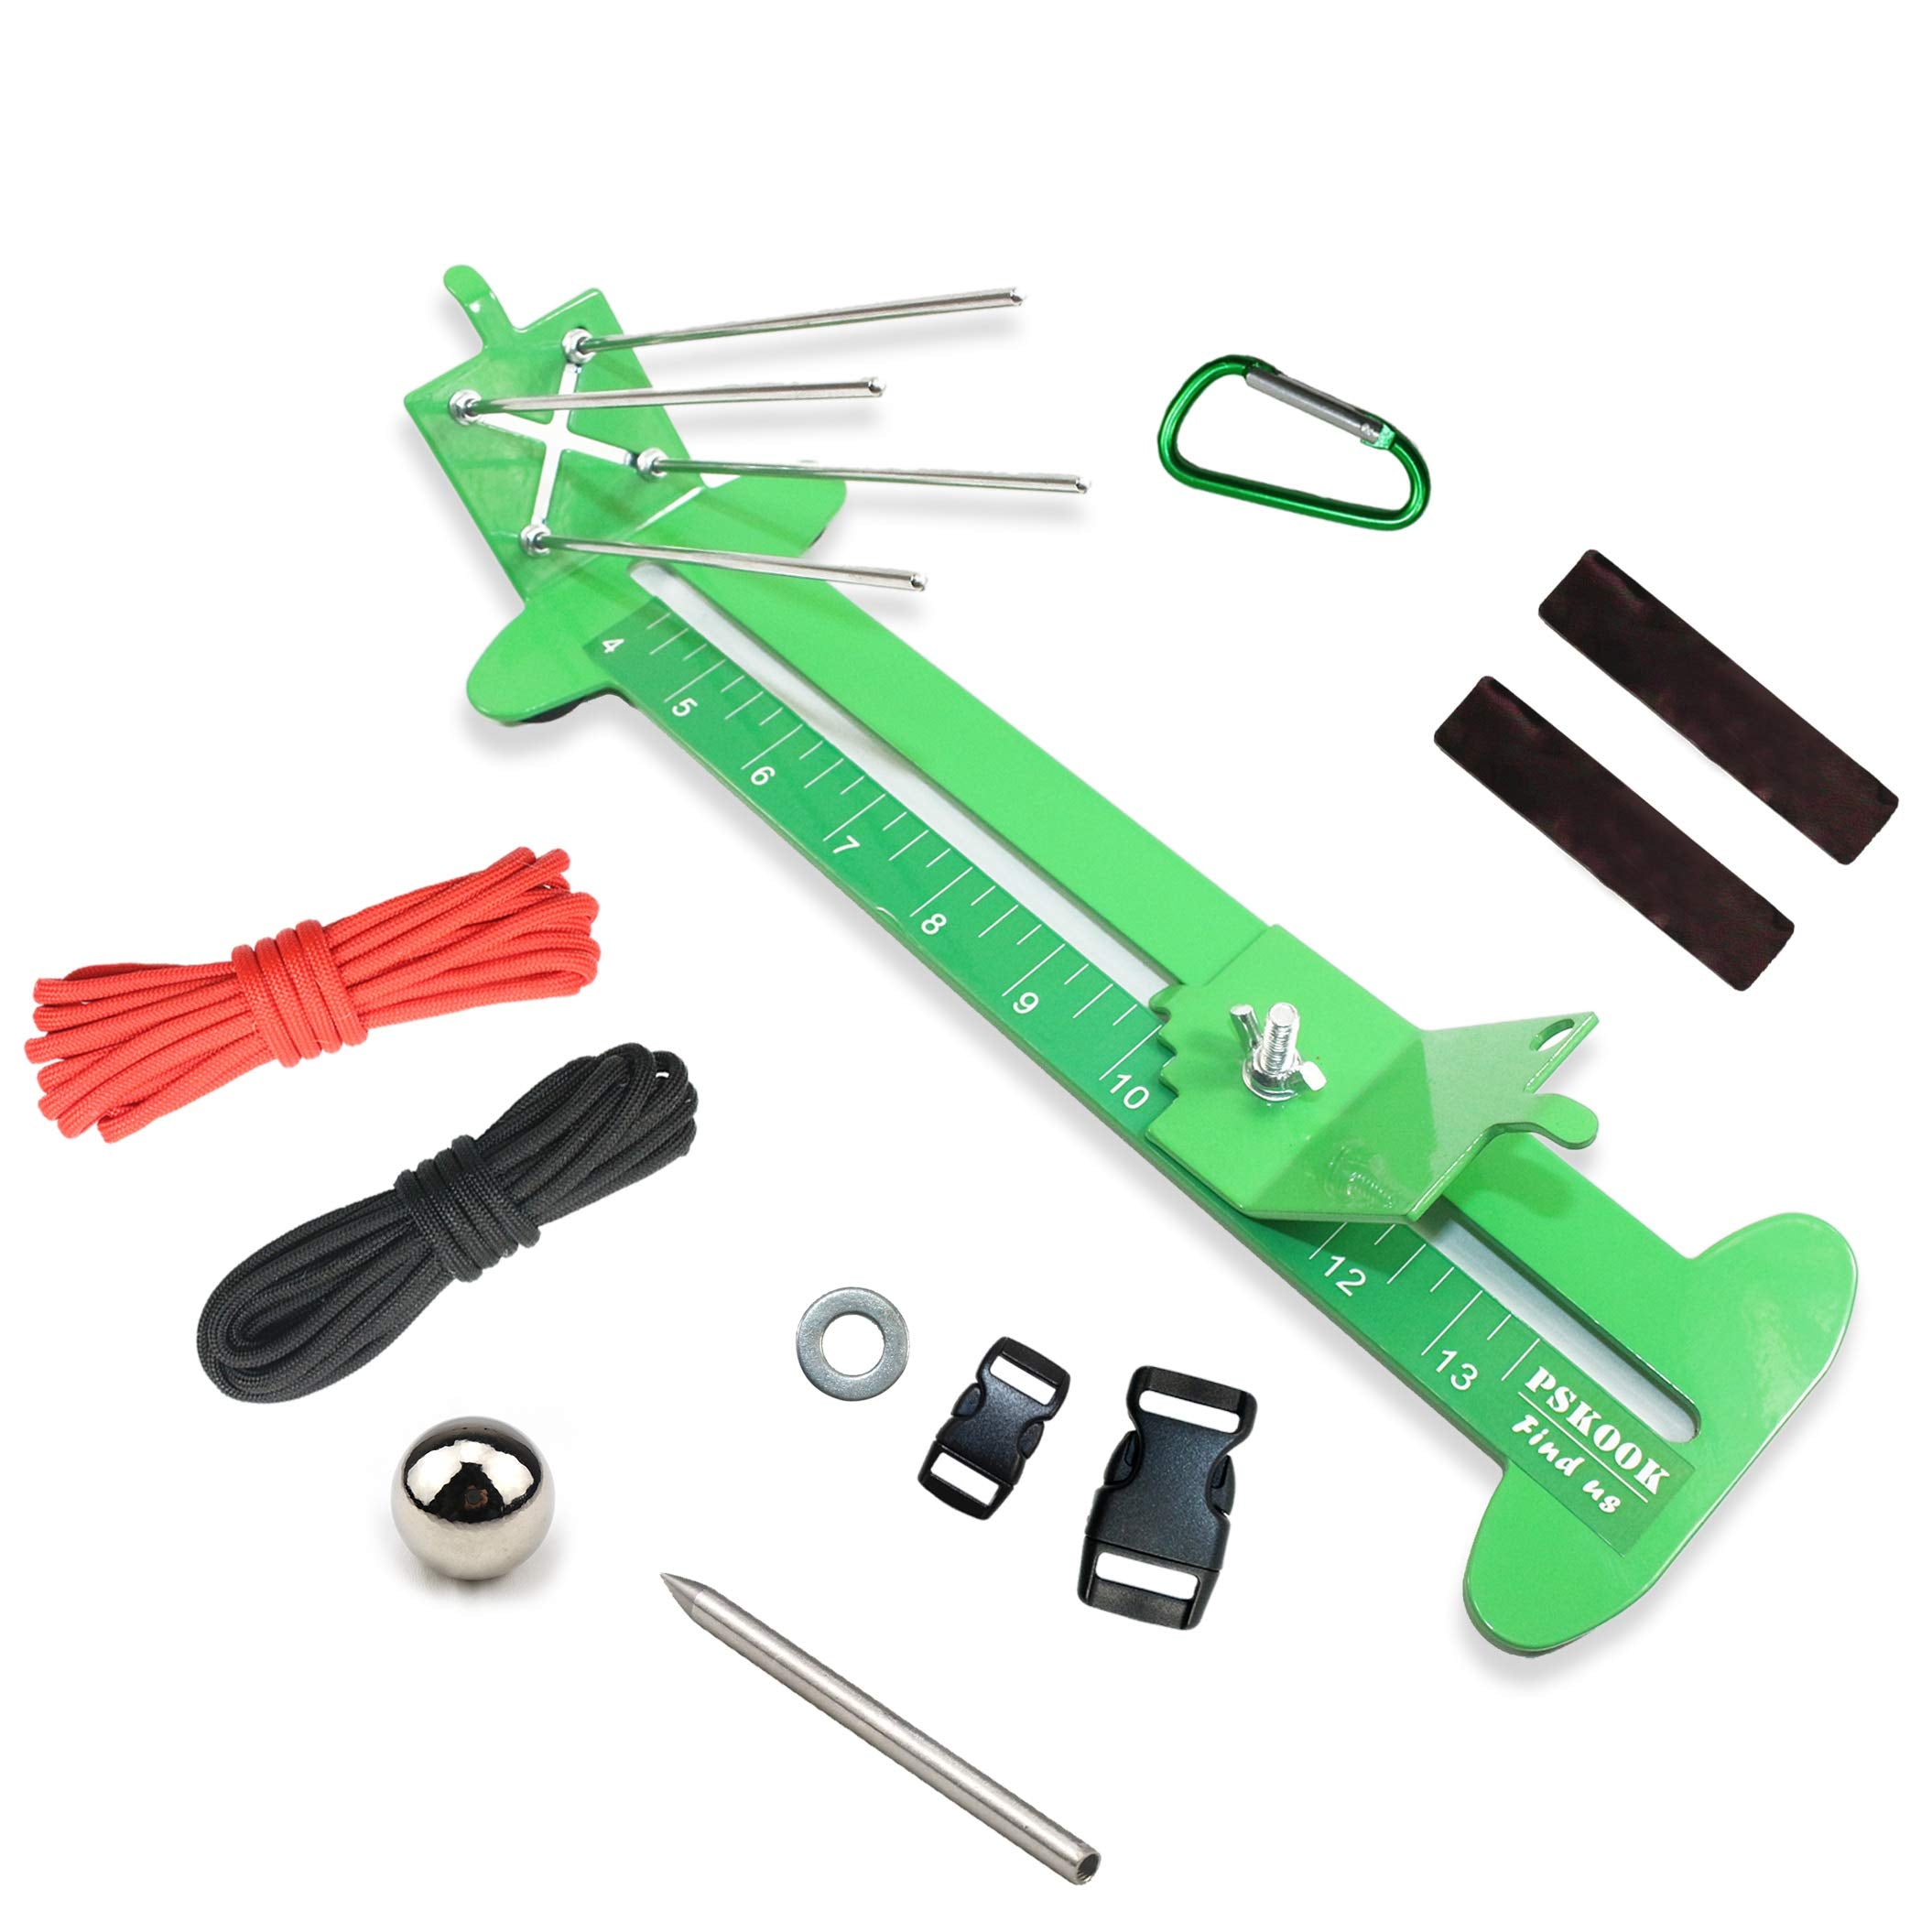 PSKOOK Monkey Fist Jig and Paracord Jig Bracelet Maker Paracord Tool Kit Adjustable Length Metal Weaving DIY Craft Maker Tool 4" to 13 Solid Steel Accessories (Green)